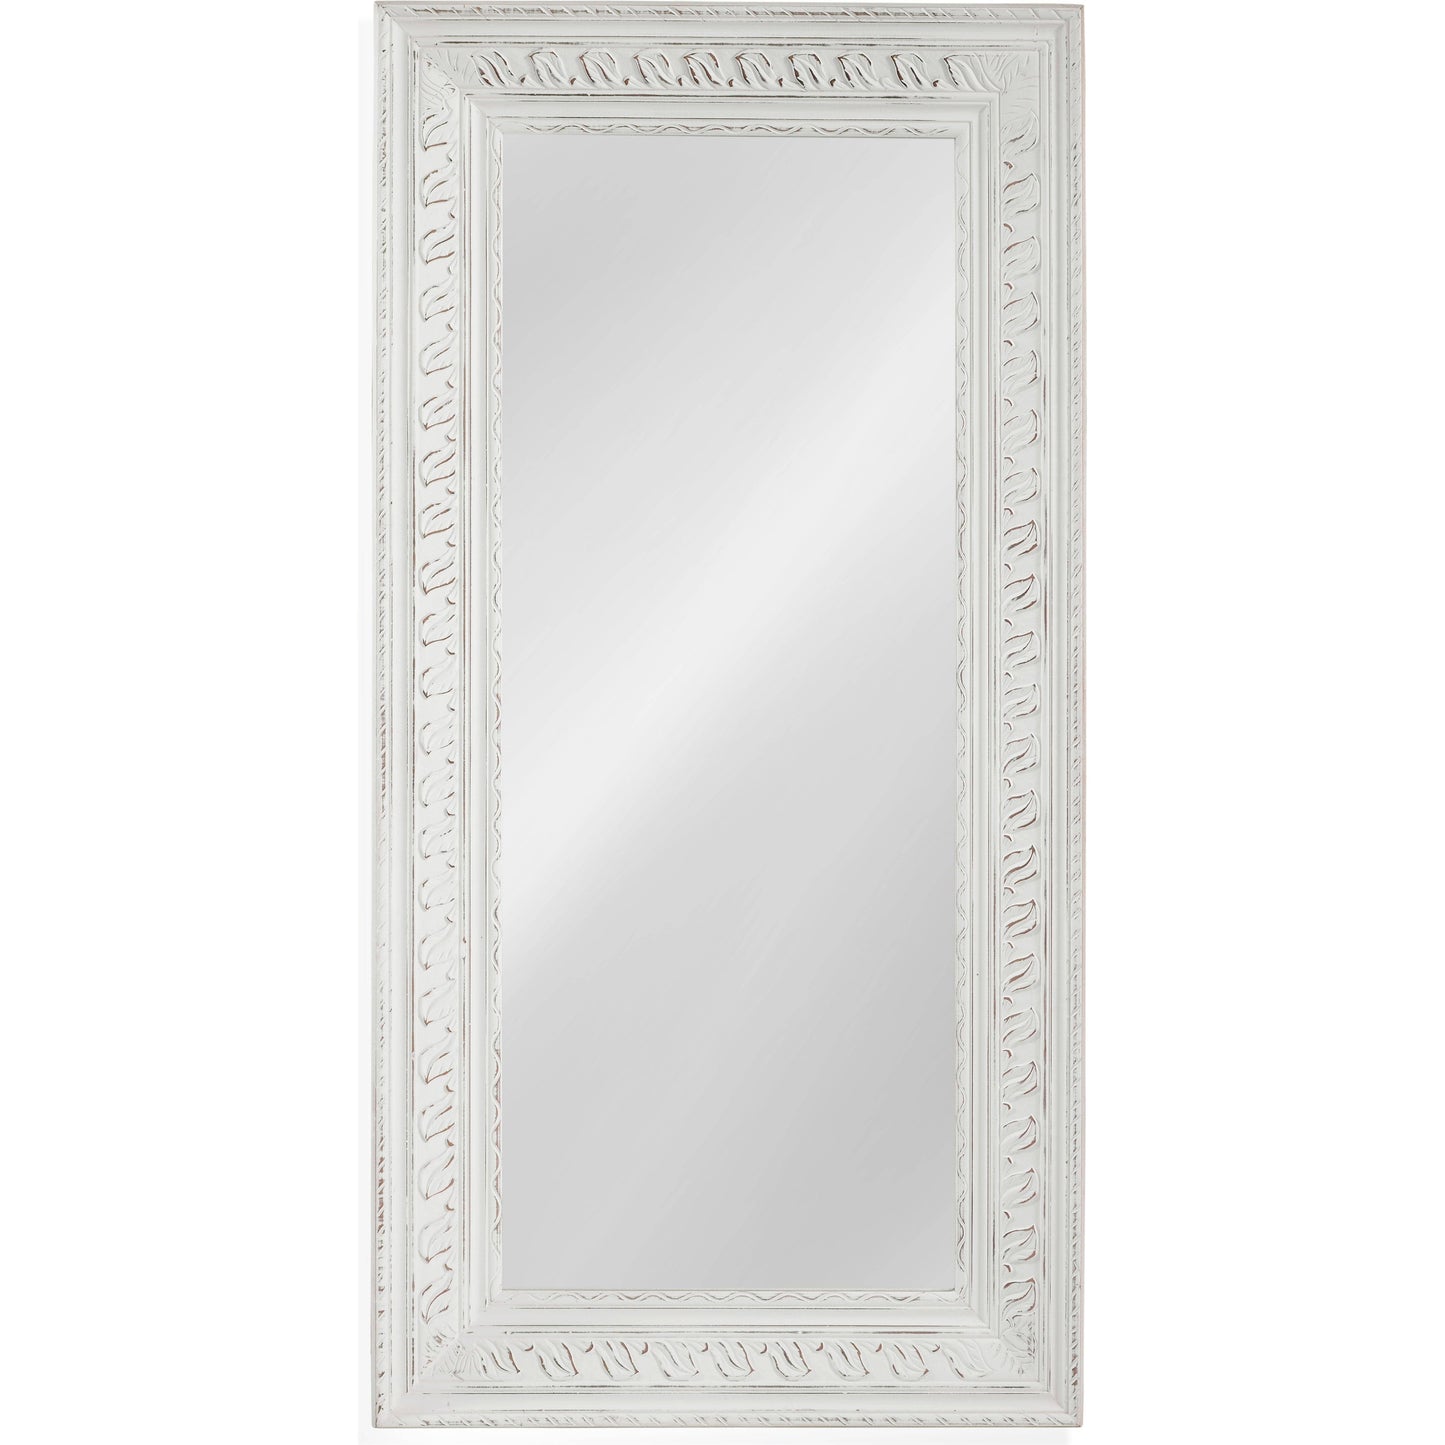 Bassett Mirror Ives Vintage Chic Floor Mirror  with white background